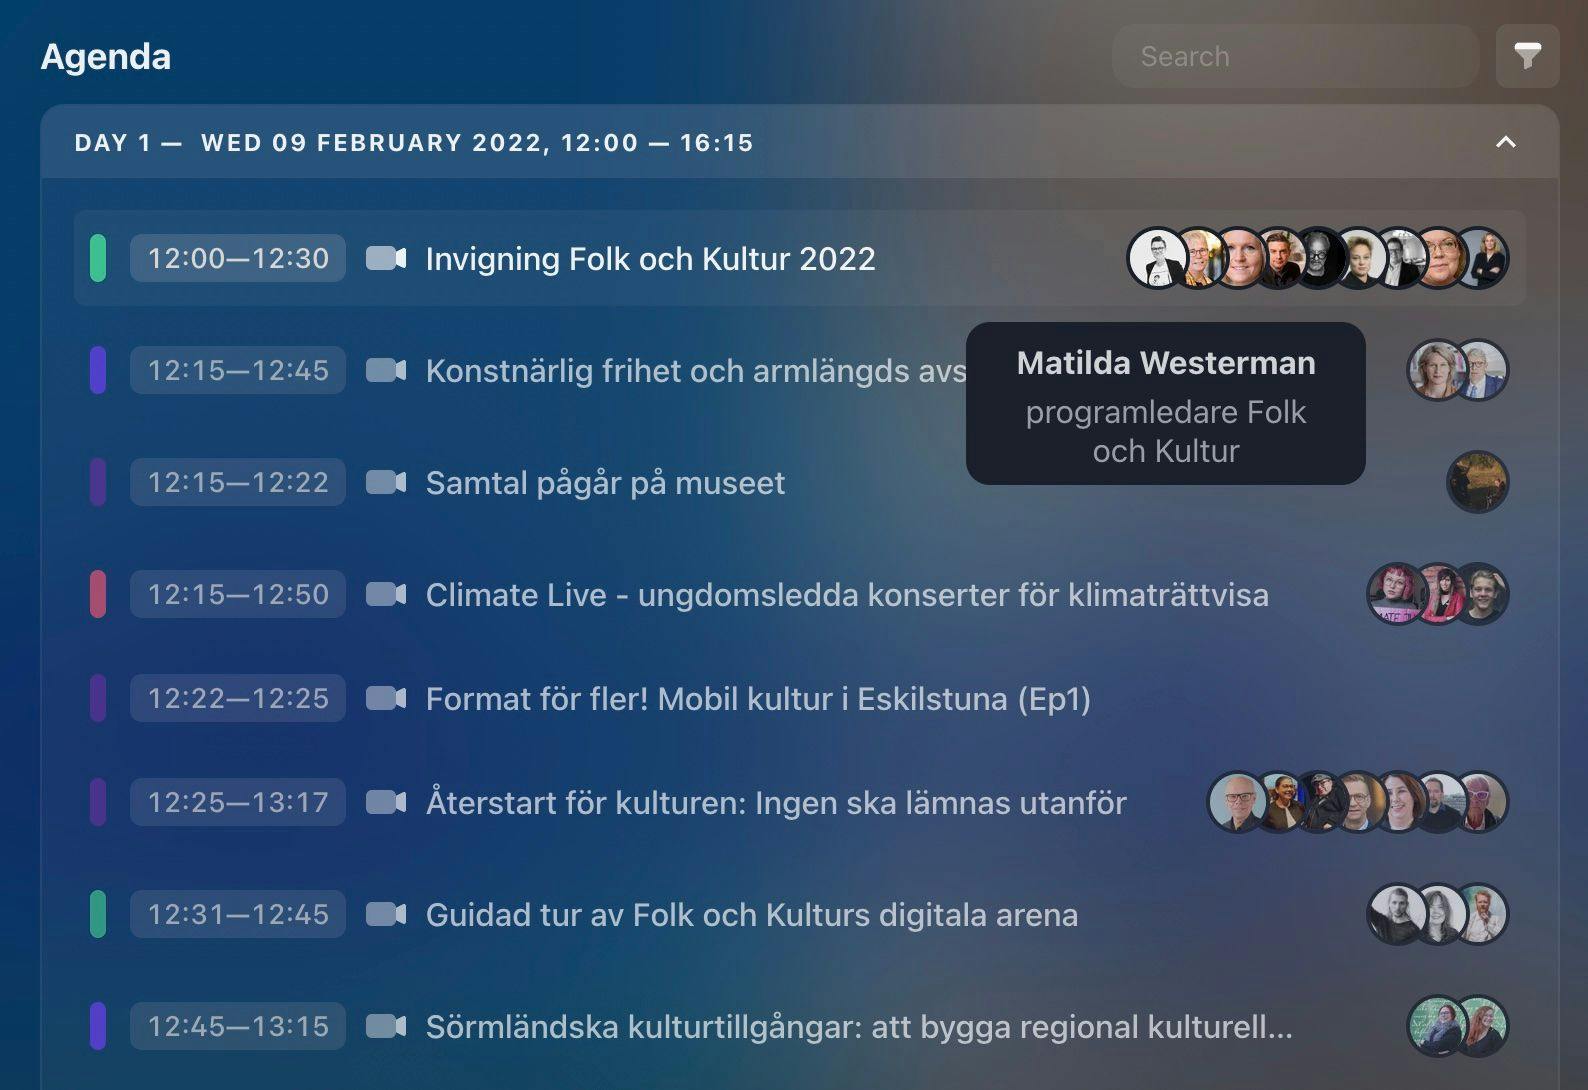 A screenshot of the agenda section for the Folk och Kultur event